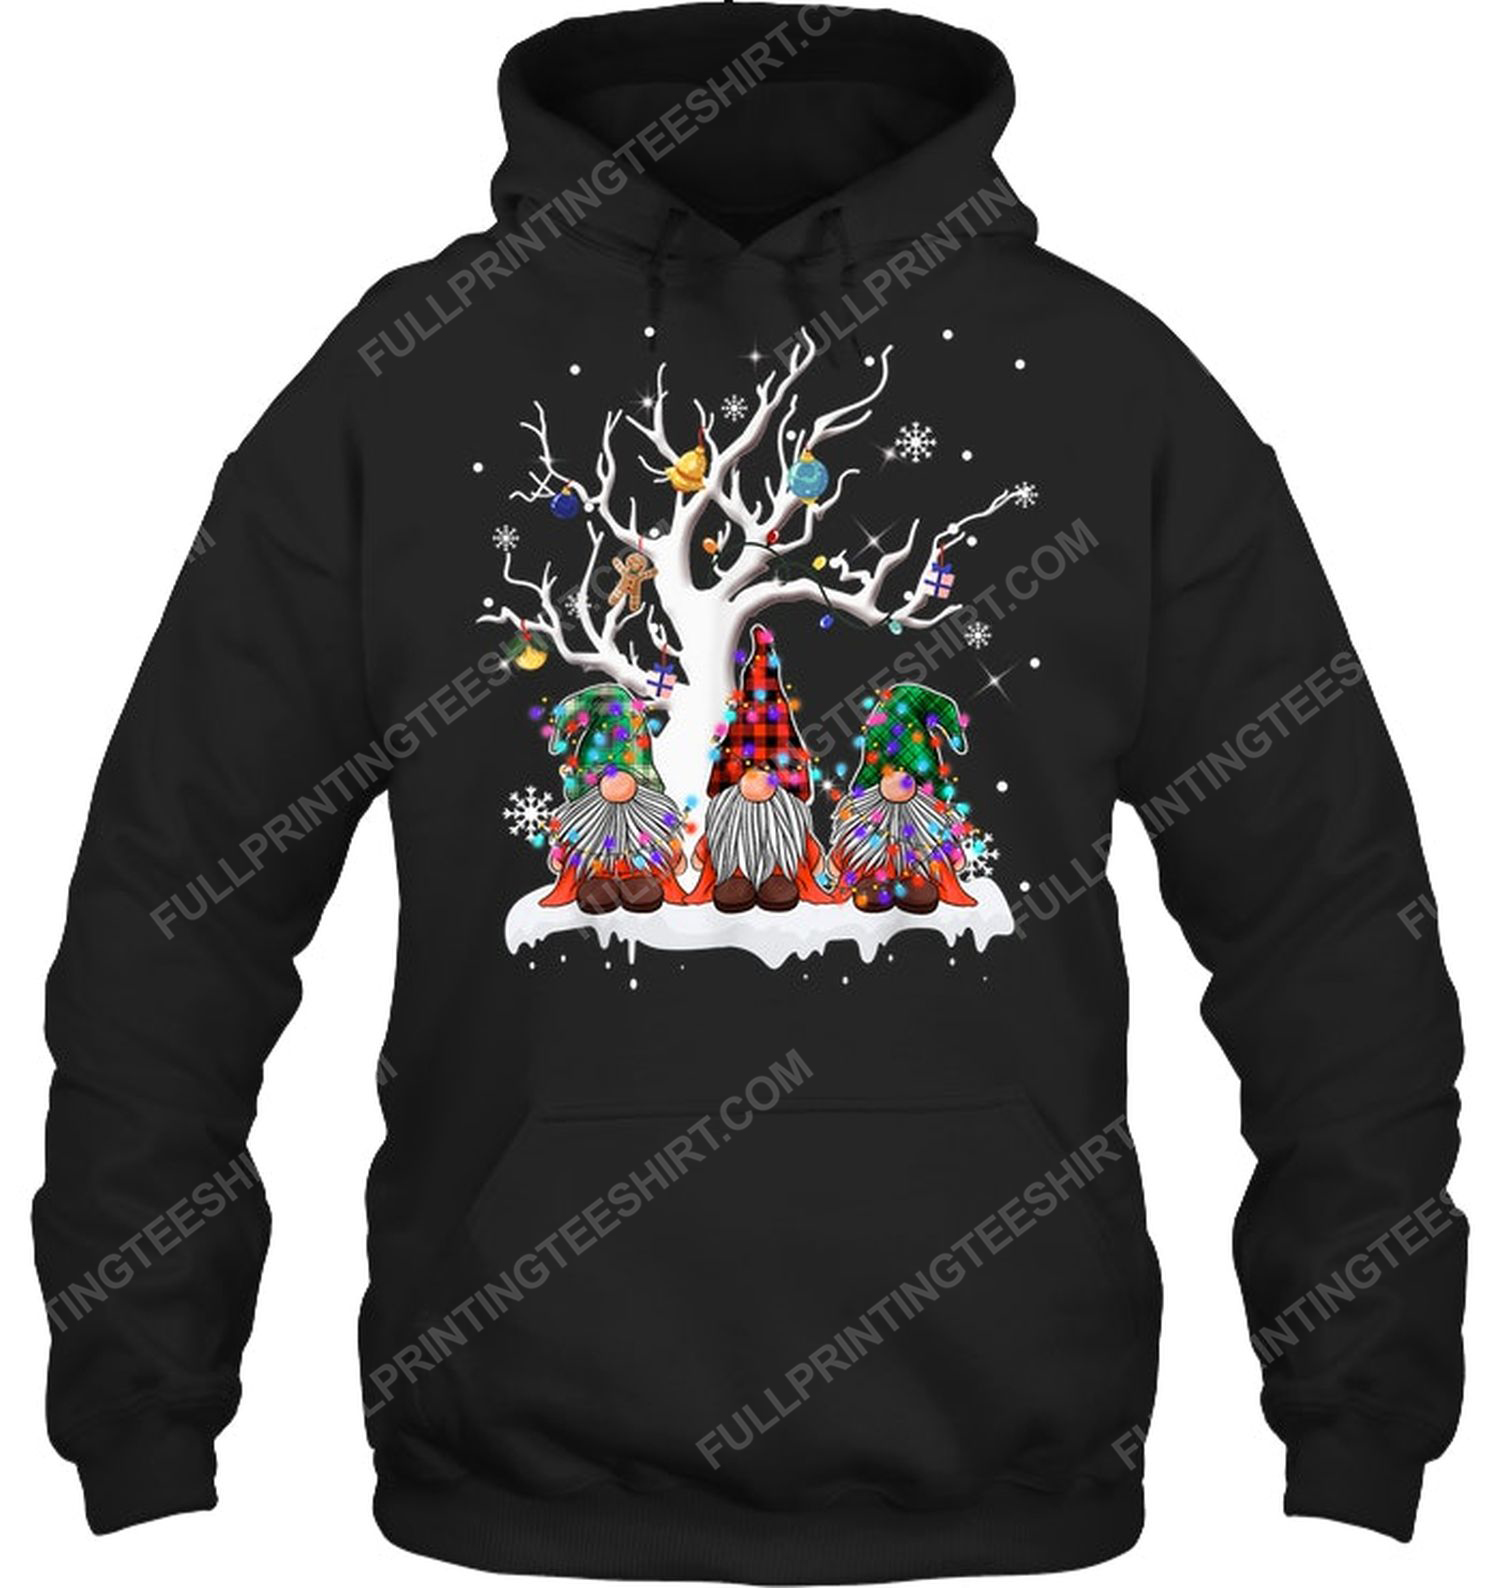 Gnomes christmas tree lights hoodie